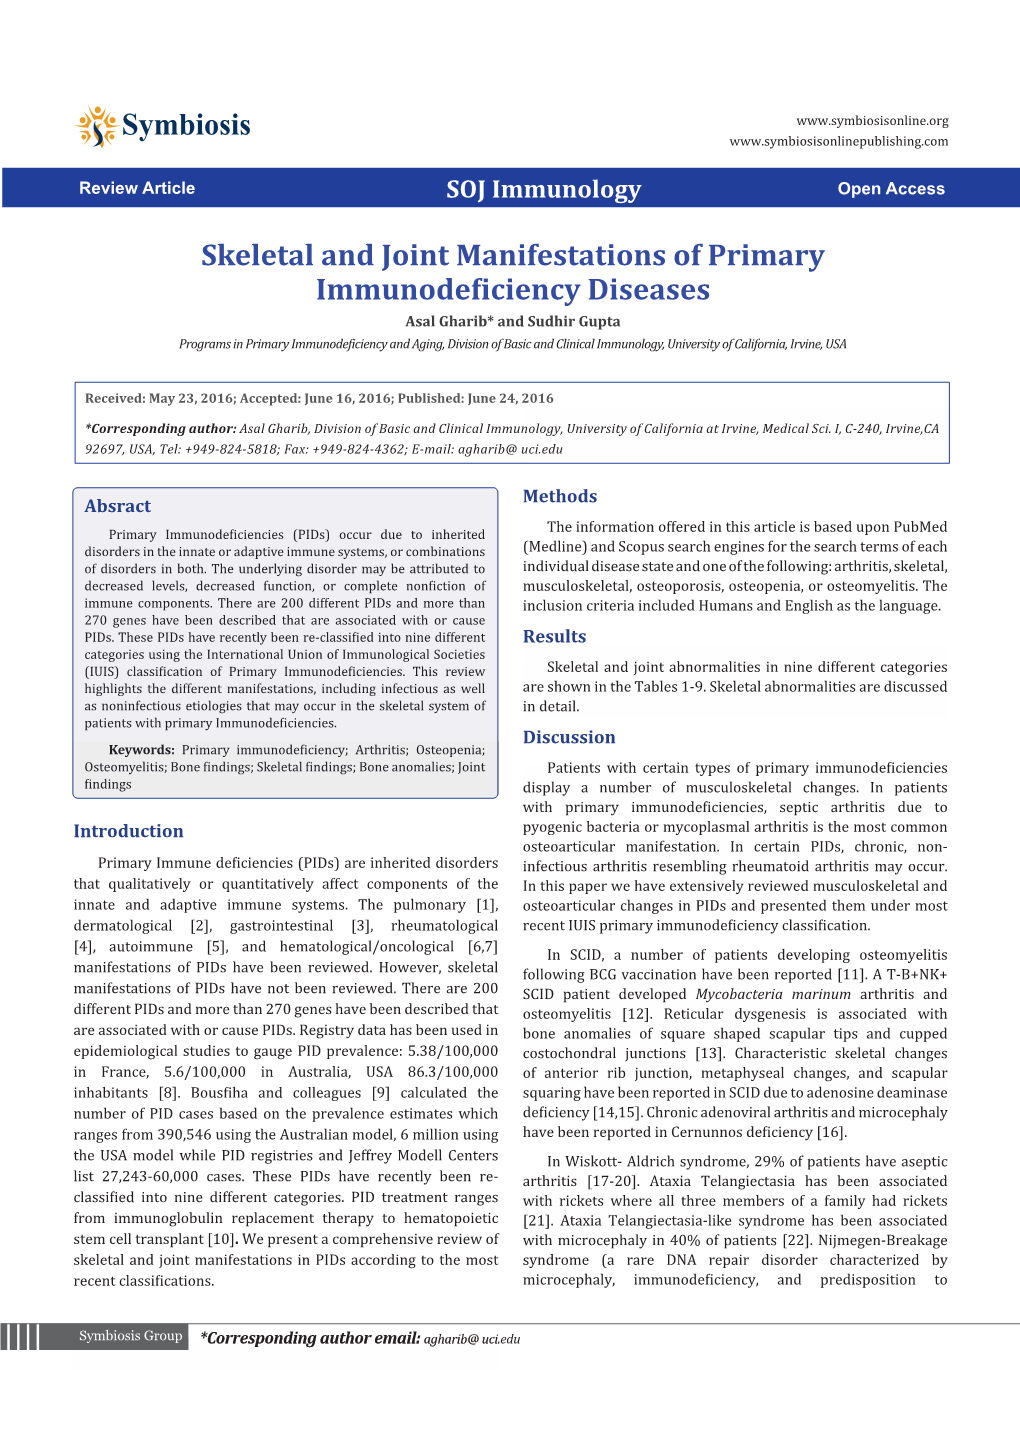 Skeletal and Joint Manifestations of Primary Immunodeficiency Diseases